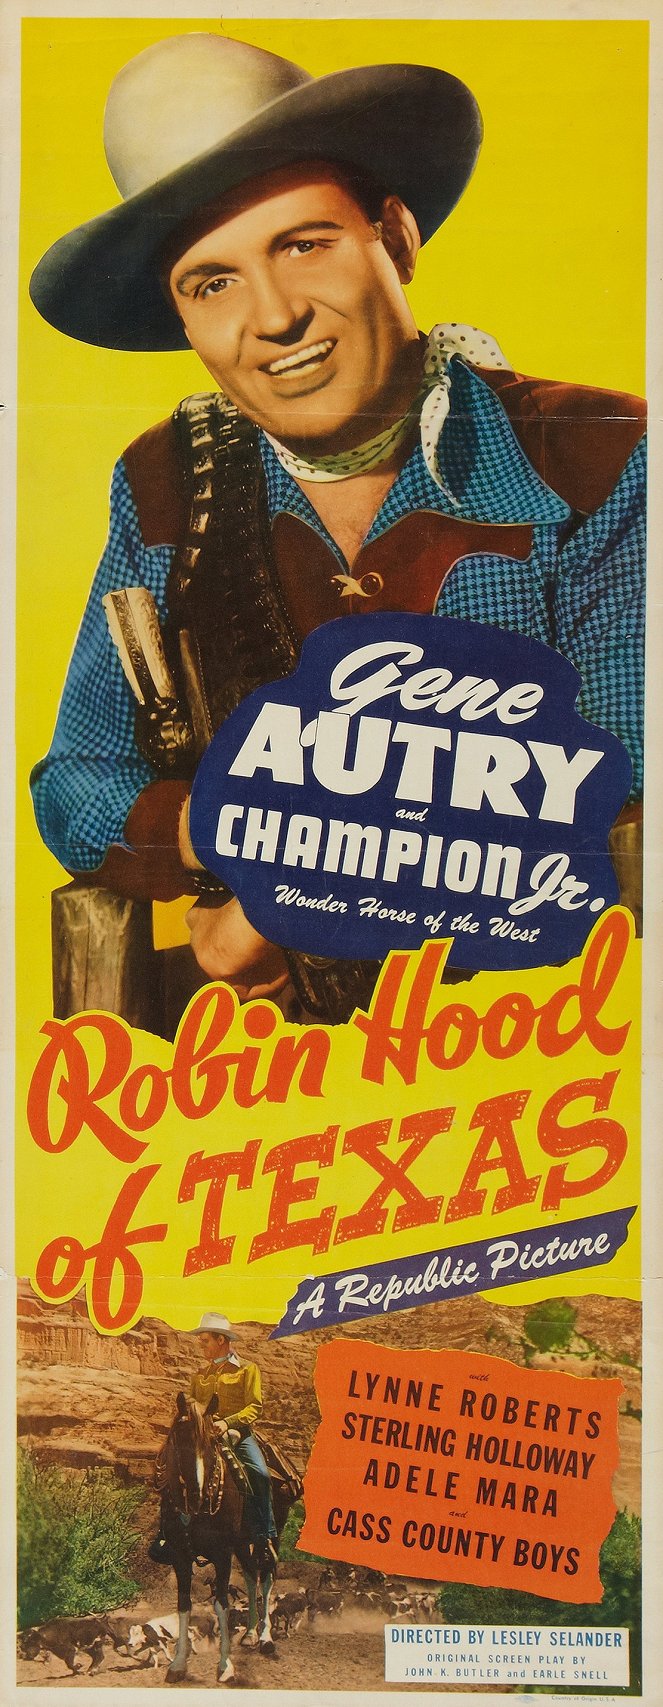 Robin Hood of Texas - Posters